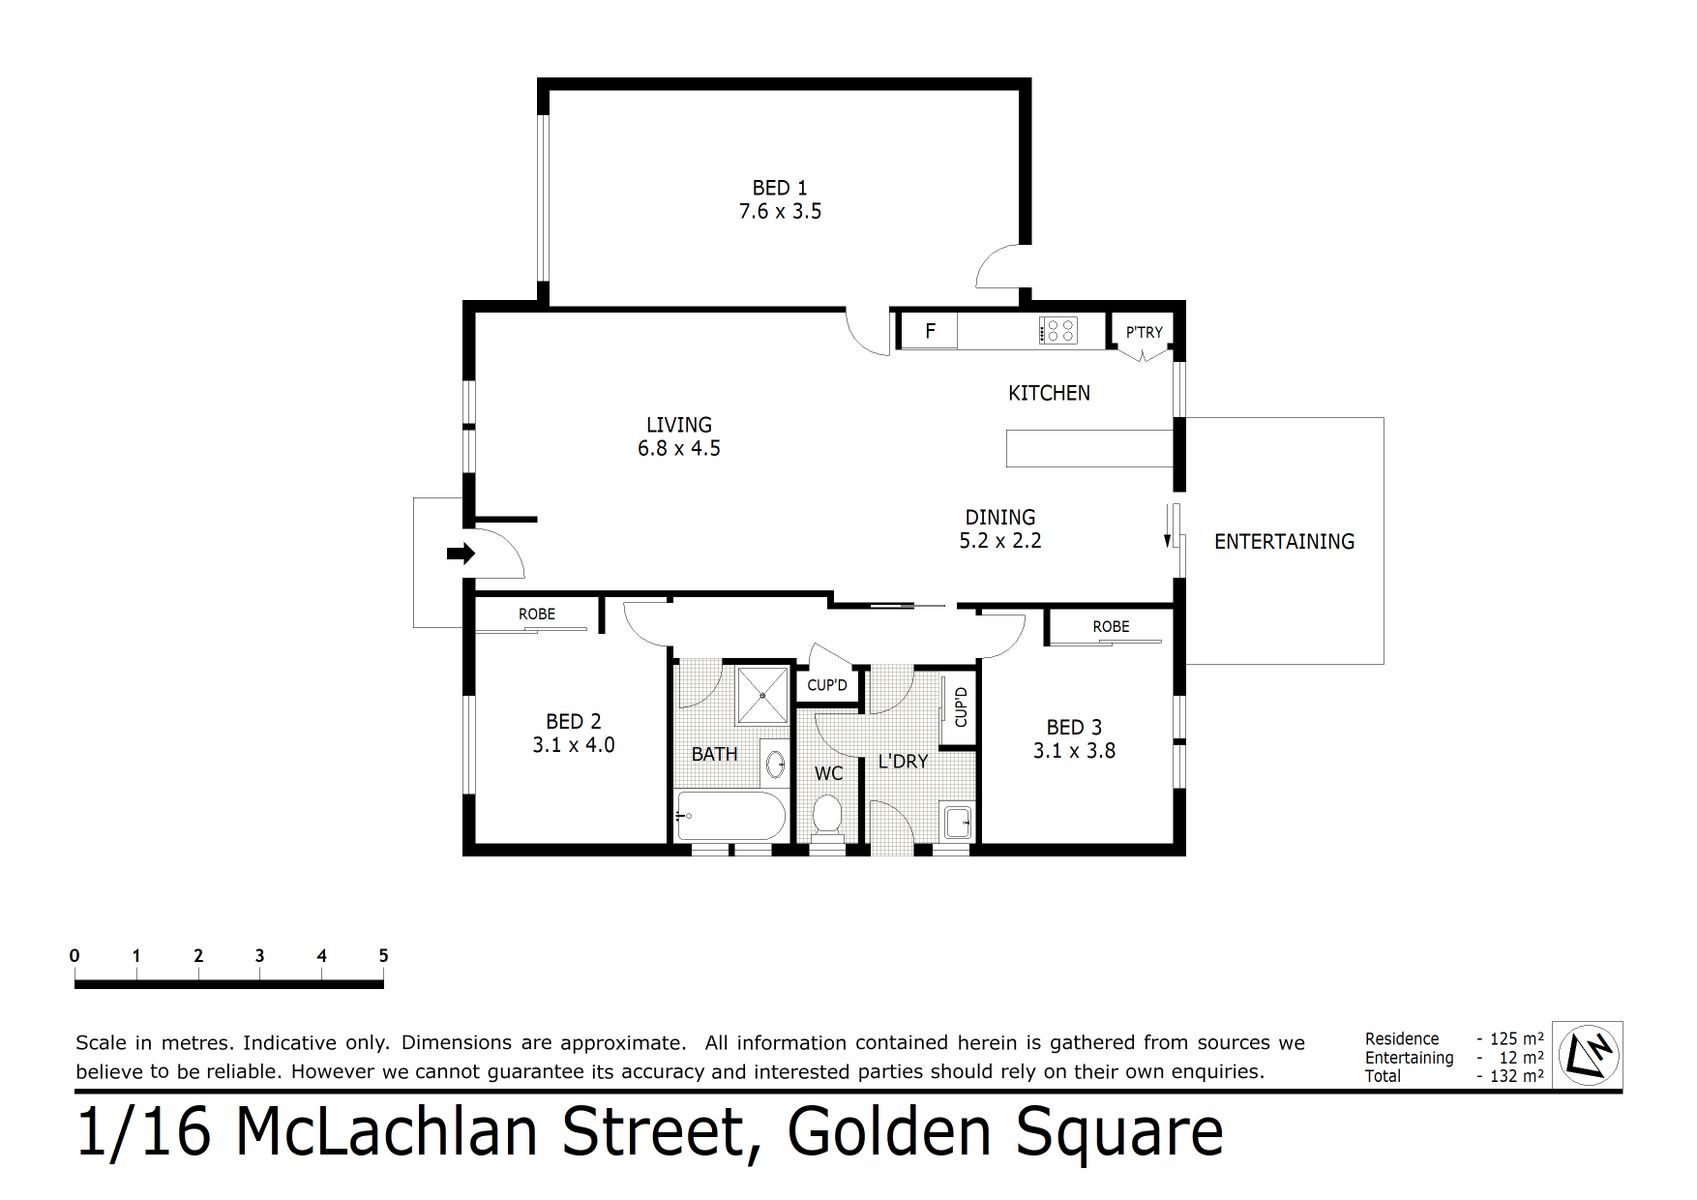 1 16 McLachlan Street Golden Square (14 SEP 2021) 125sqm